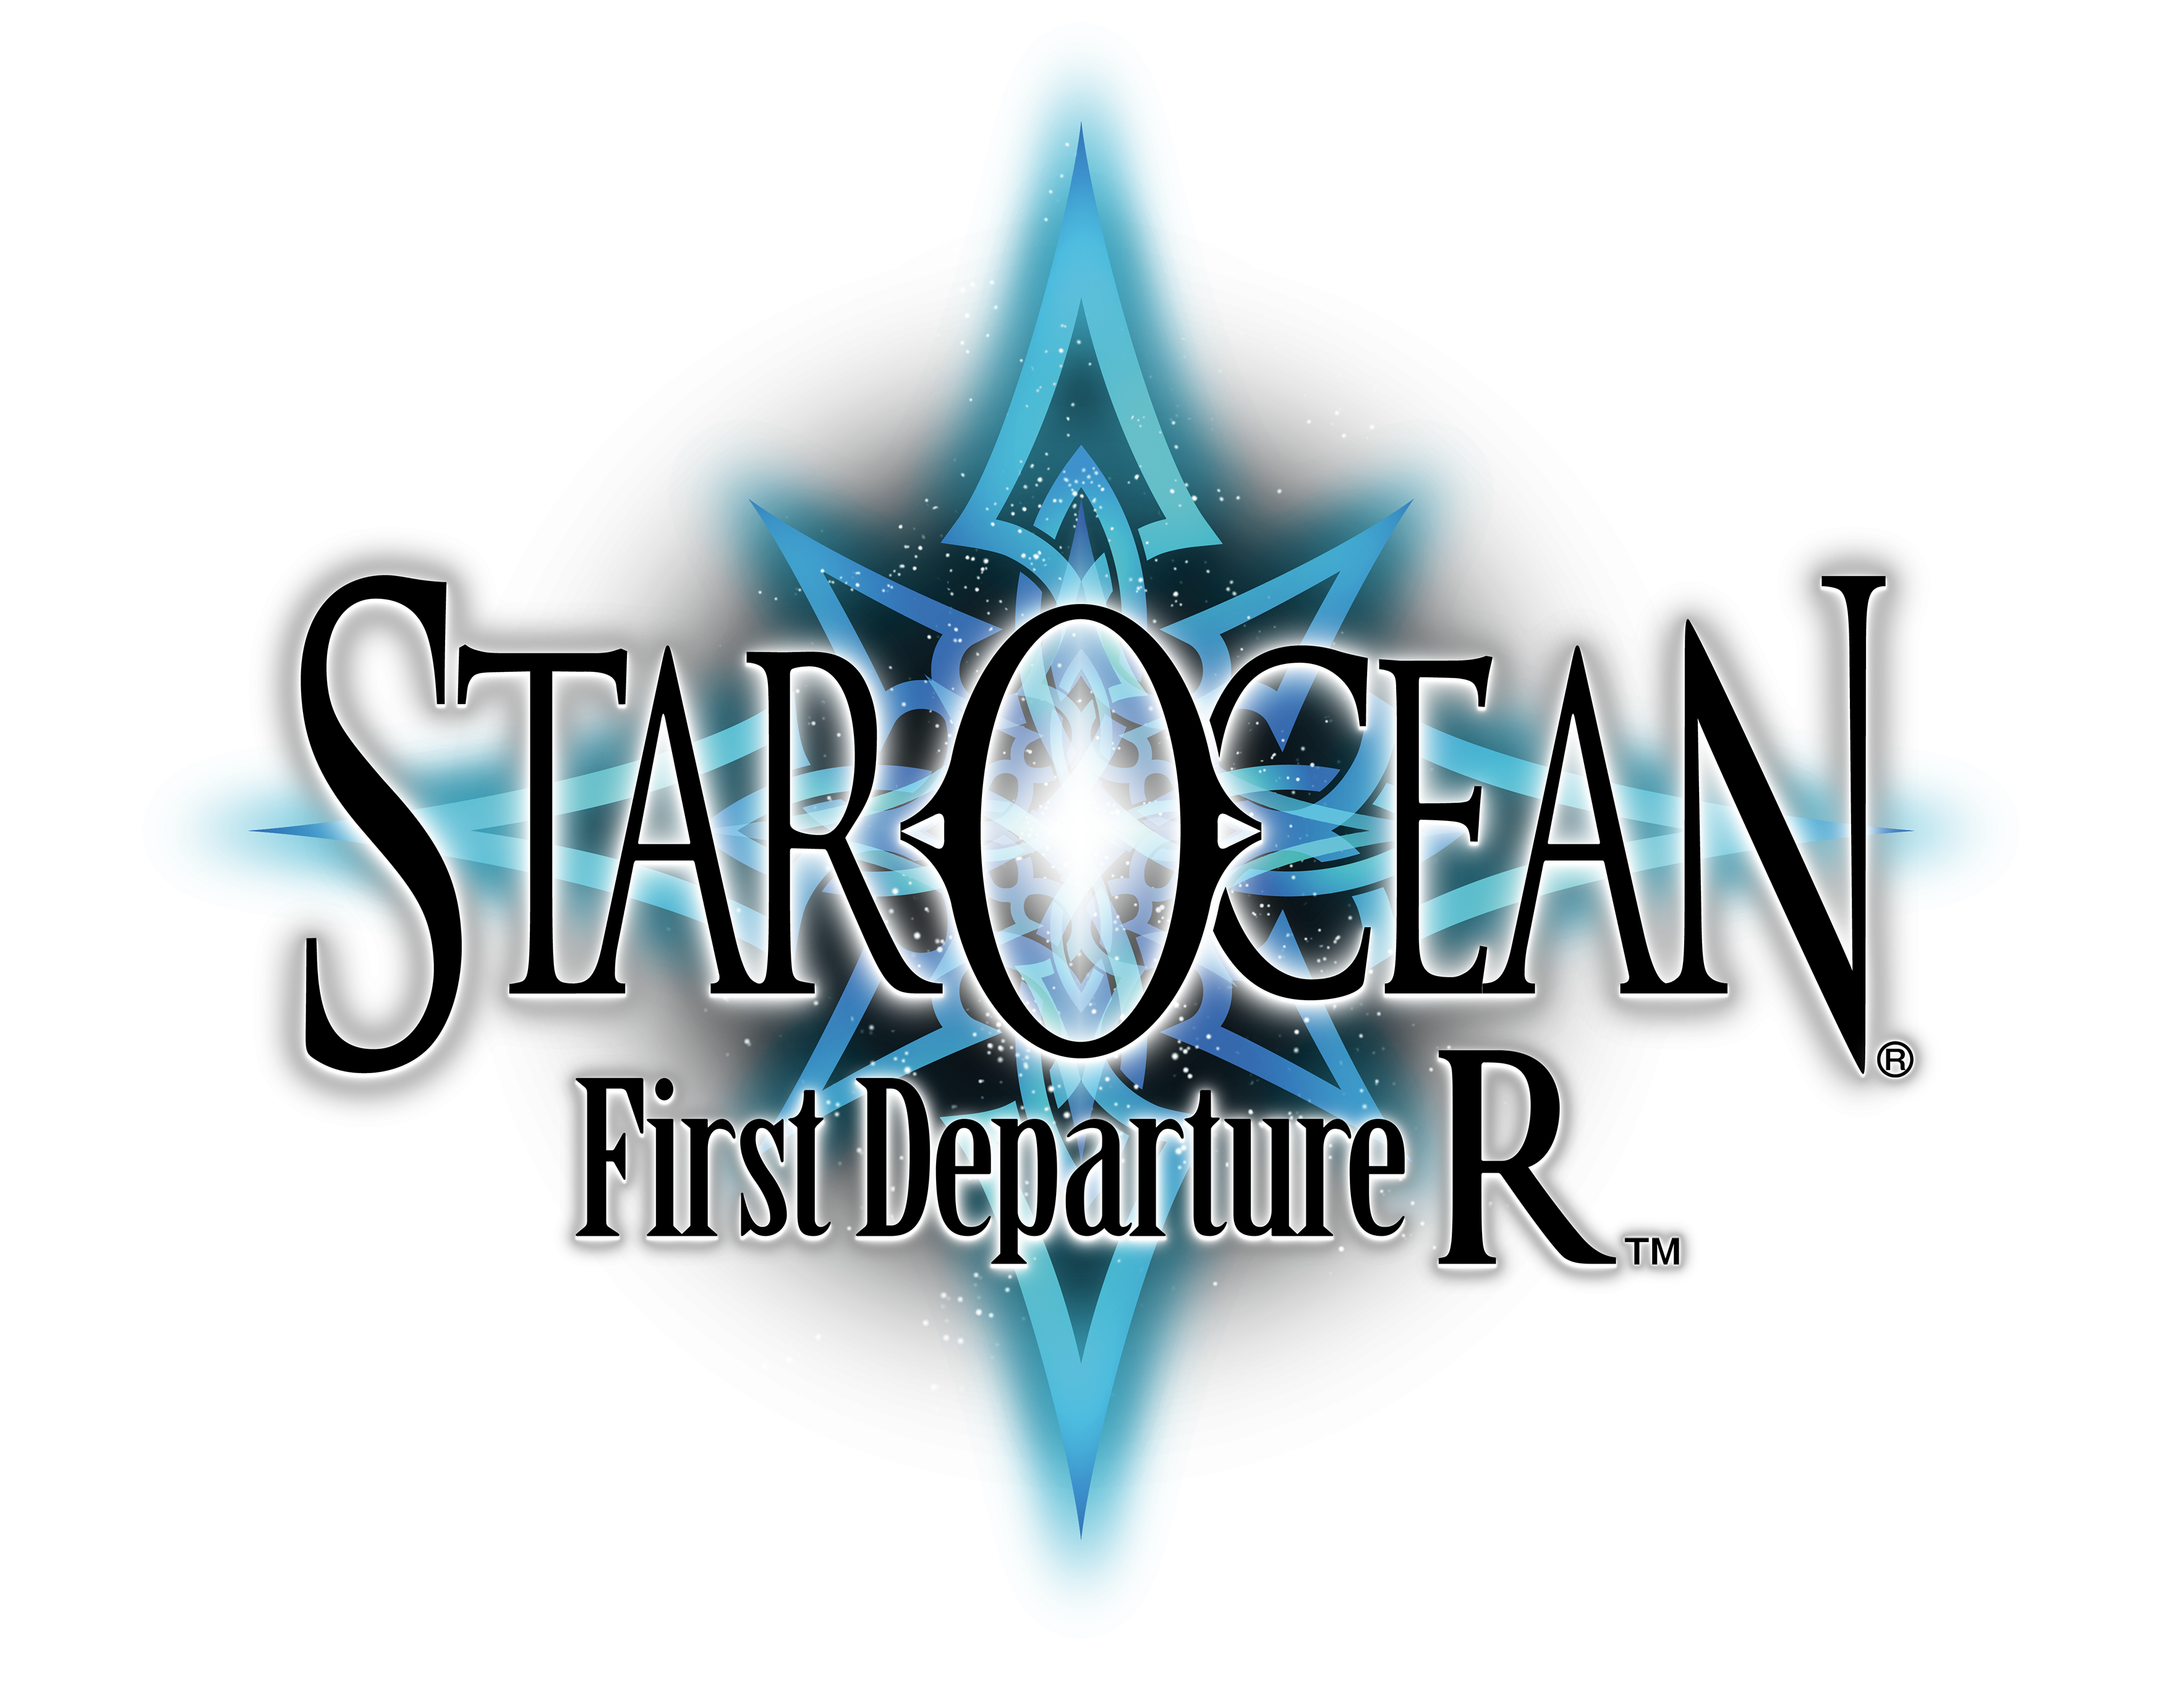 First ocean. Star Ocean first departure r. Star Ocean 1. Star Ocean first departure r ps4. Star Ocean first departure PSP.